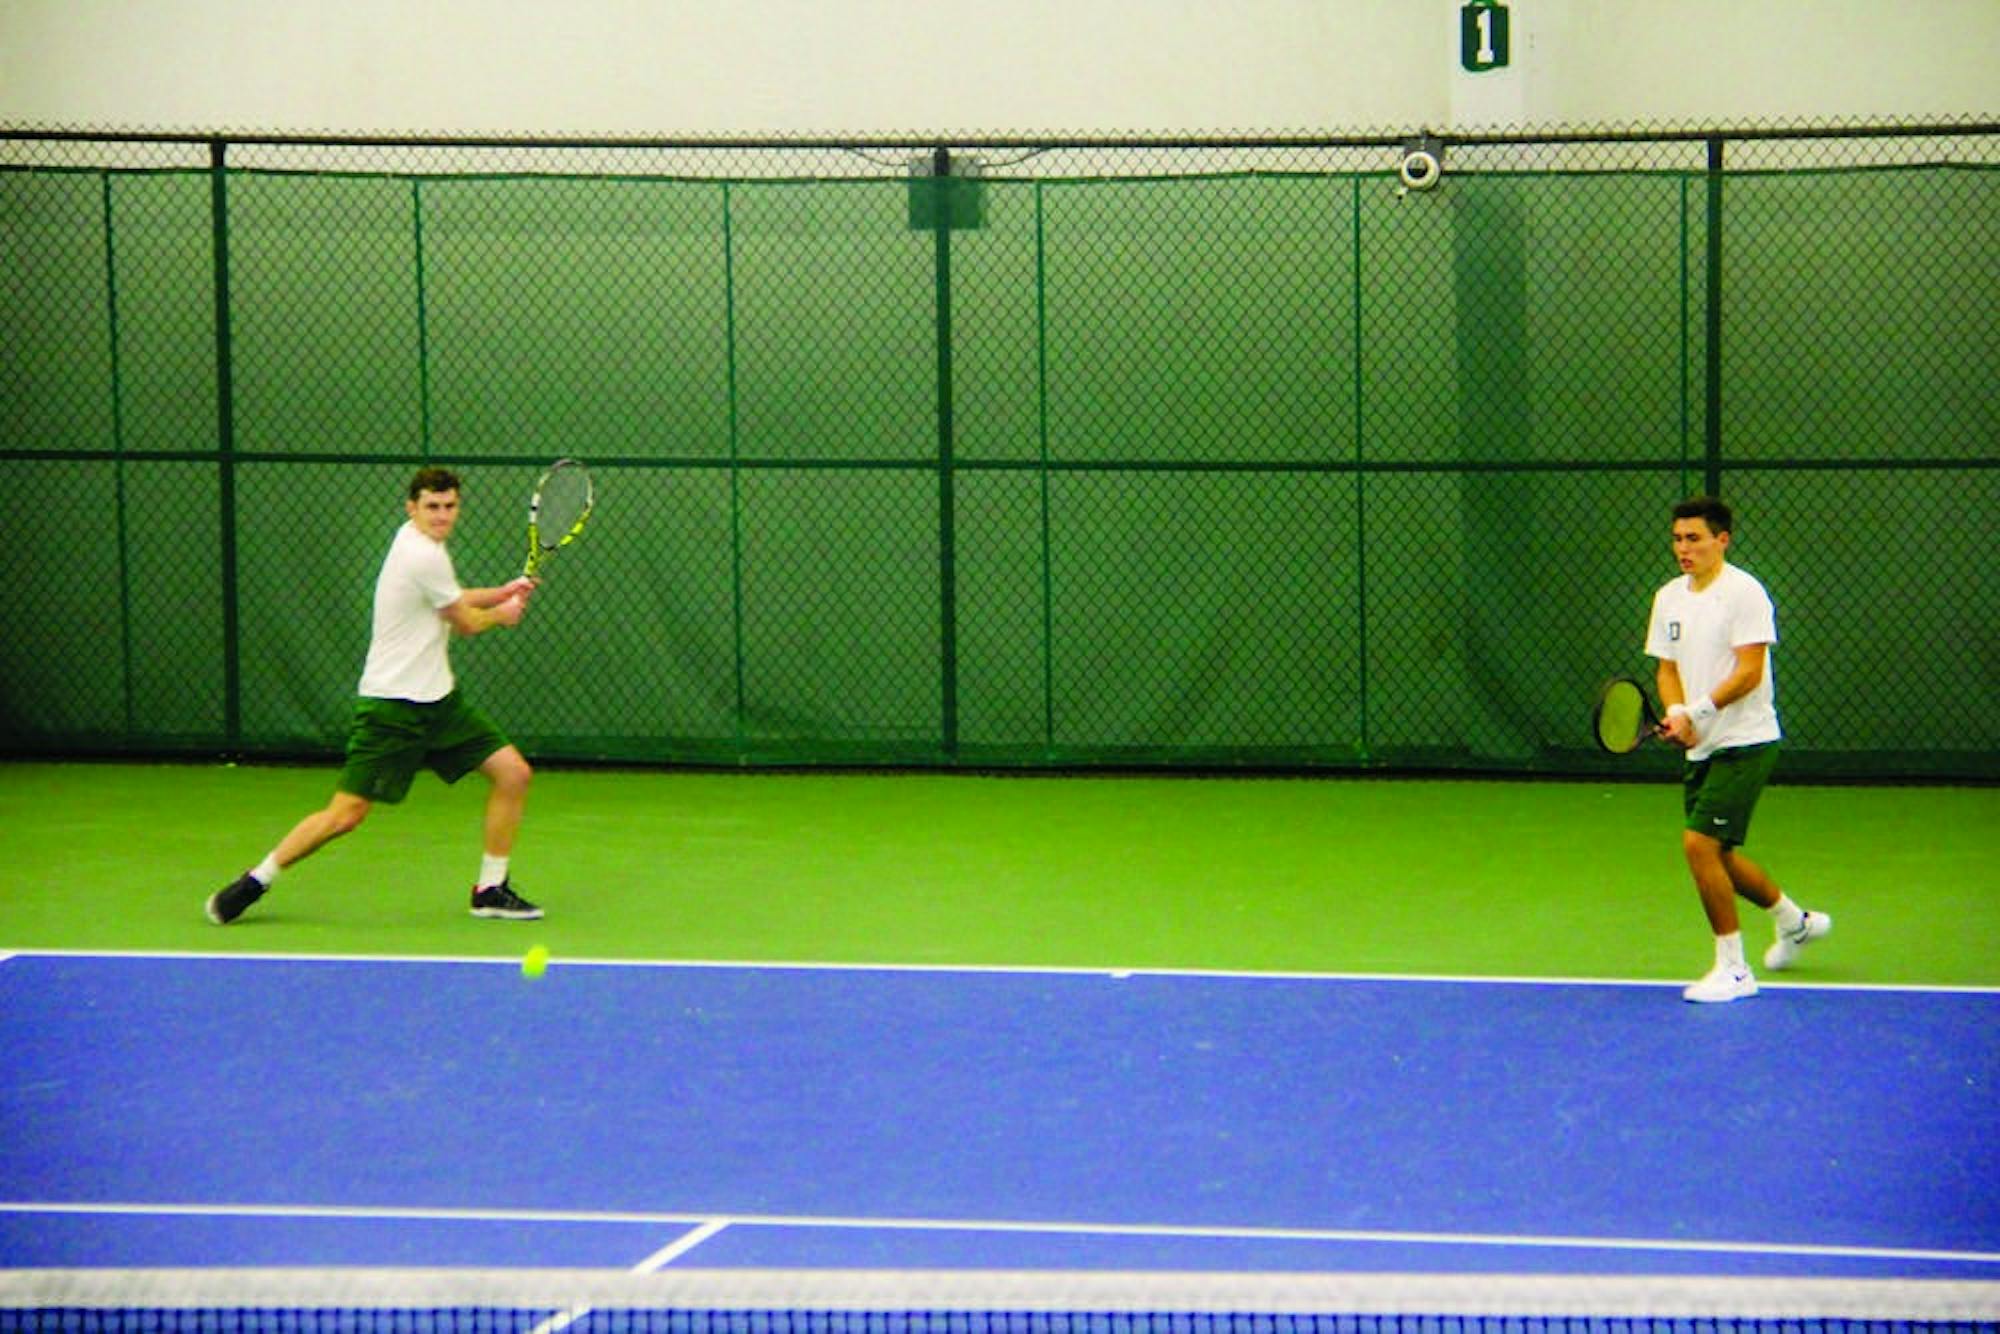 2.4.19.sports.tennis_LorraineLiu.jpg